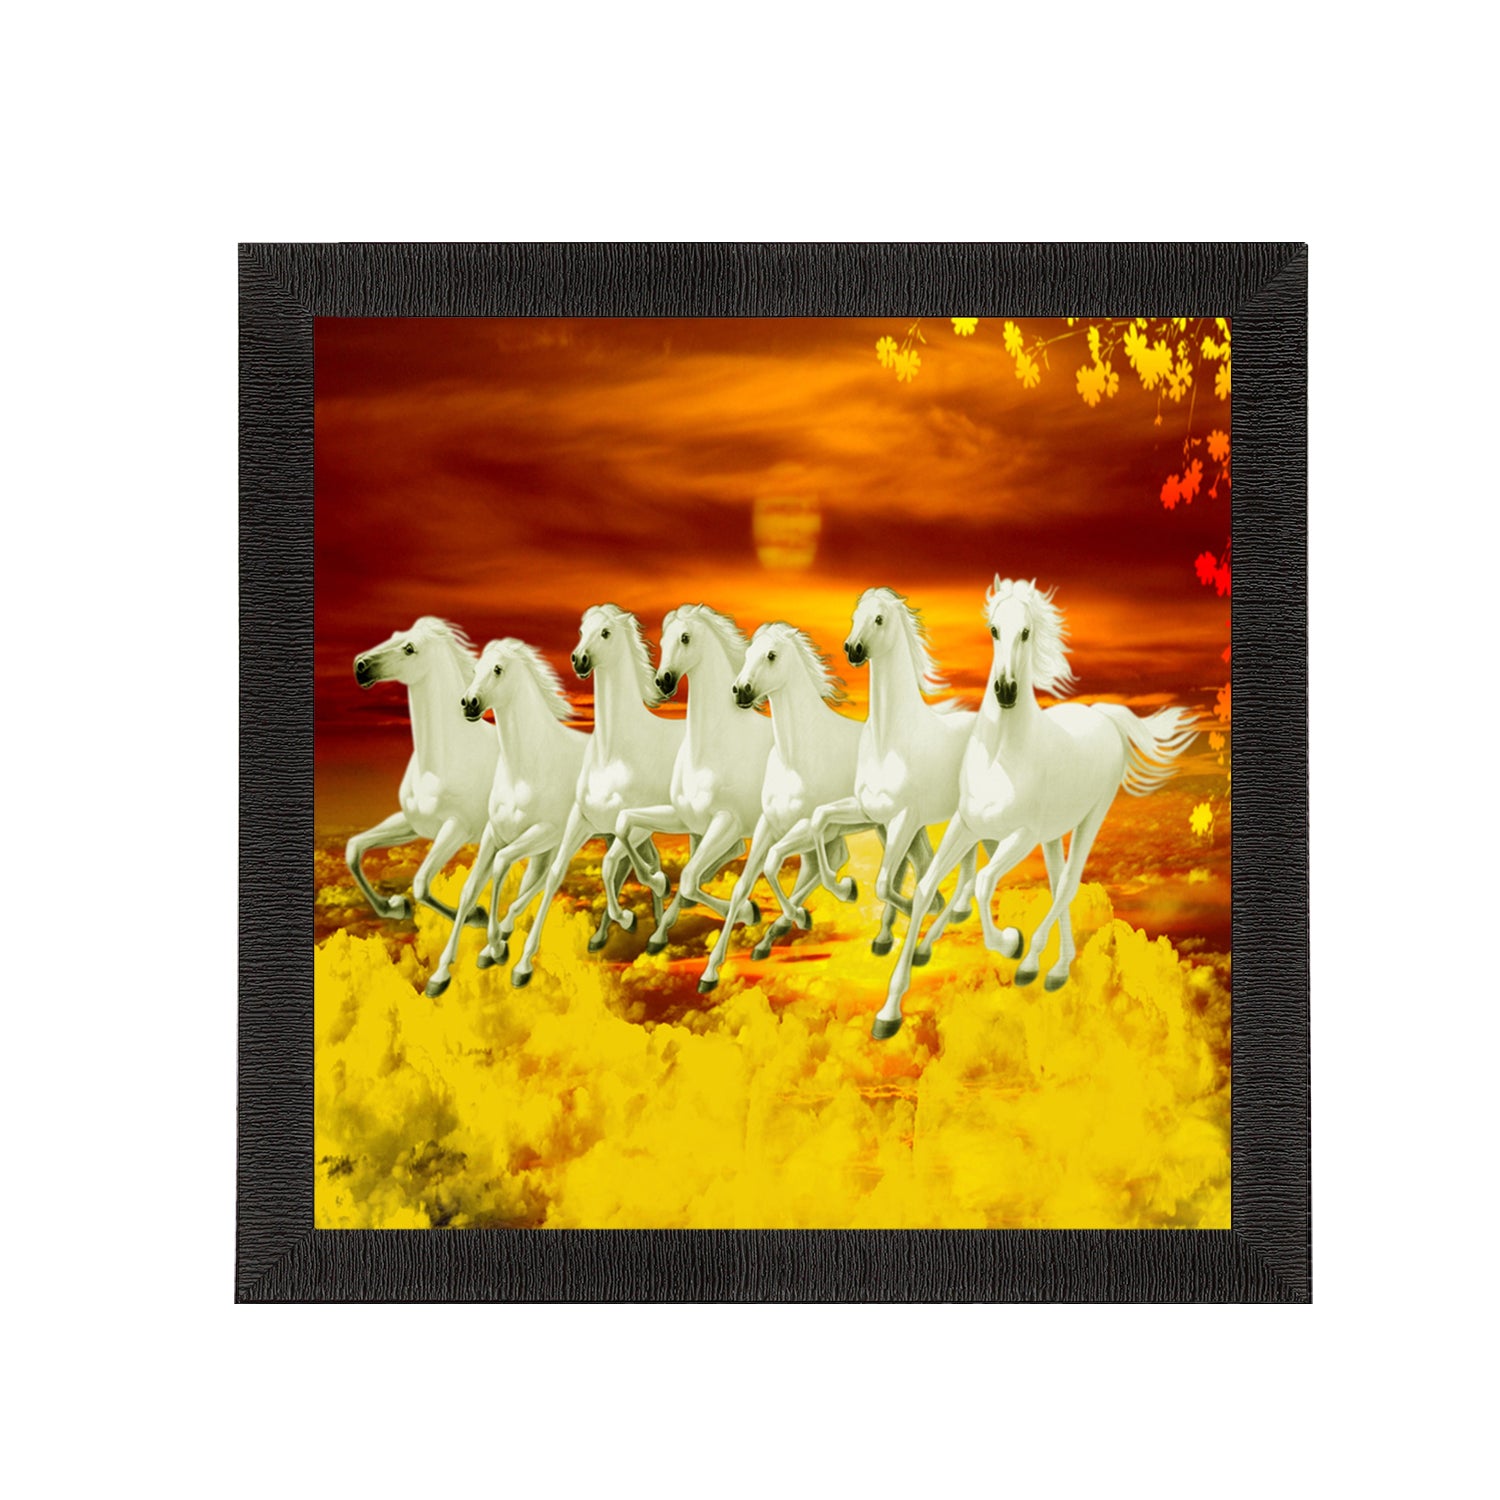 Seven White Running Horses Painting Digital Printed Animal Wall Art